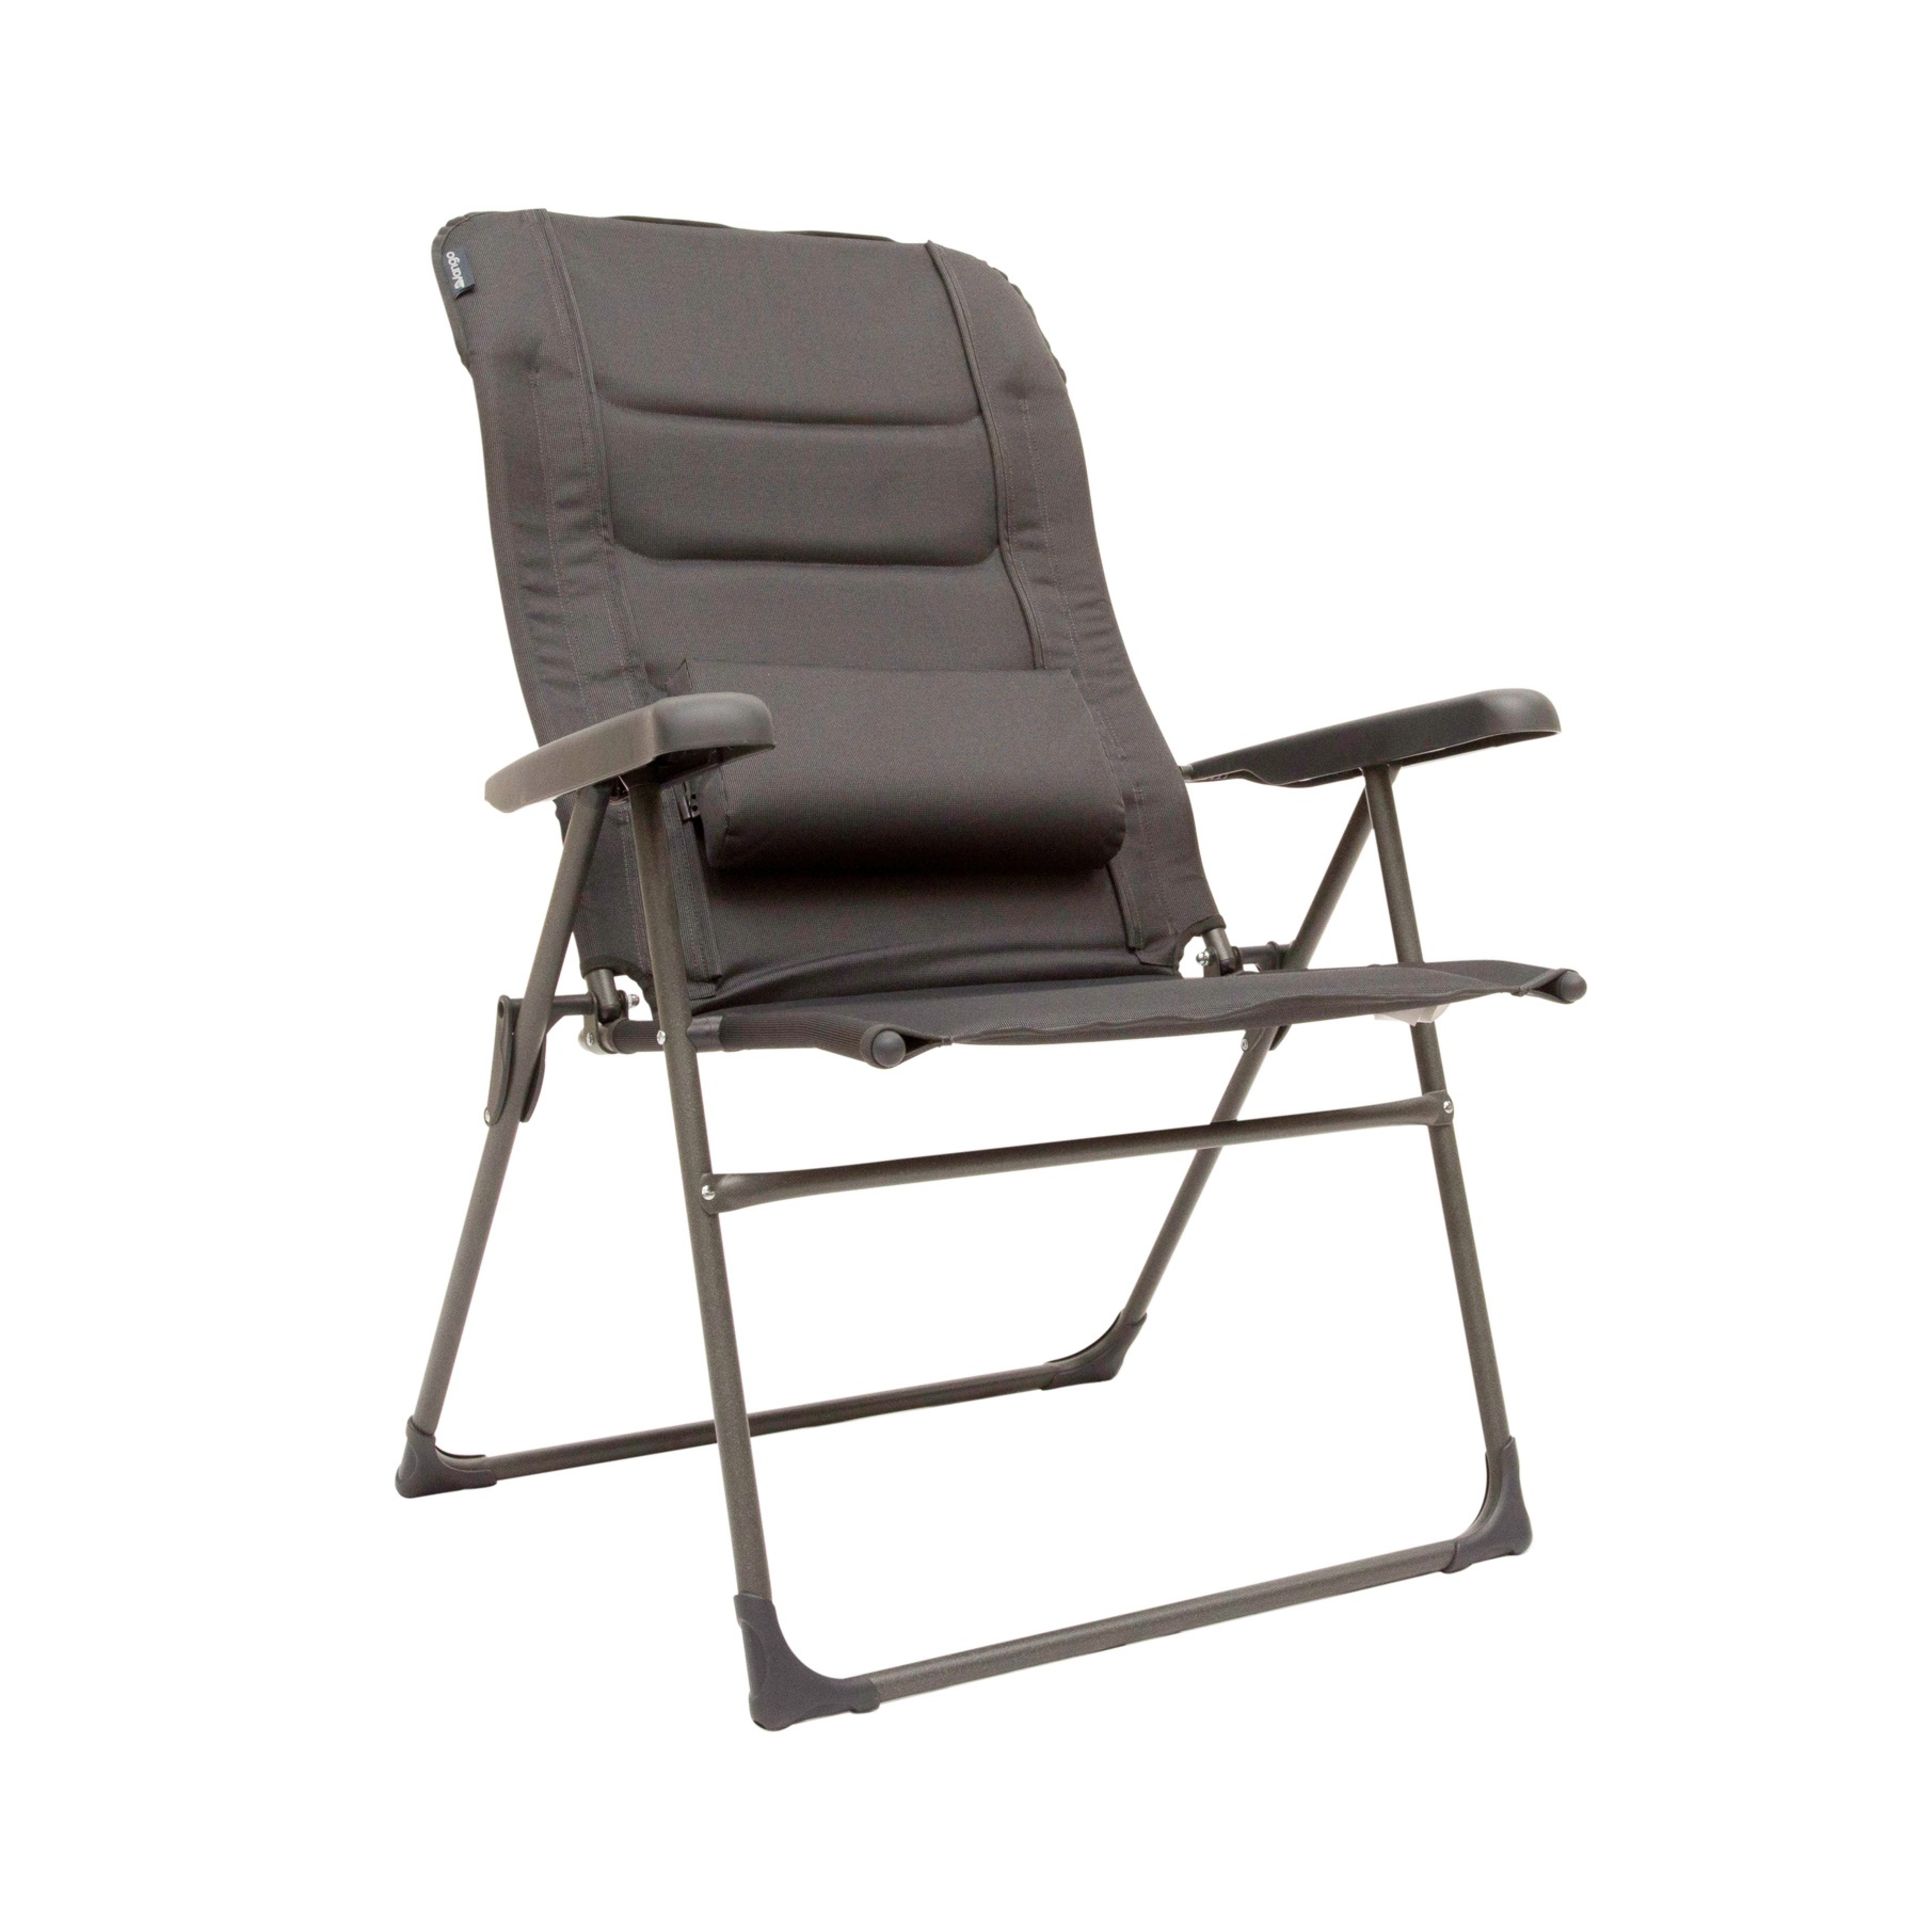 2 x Vango Hampton Grande DLX Chair, Excalibur, Ext - Image 2 of 4